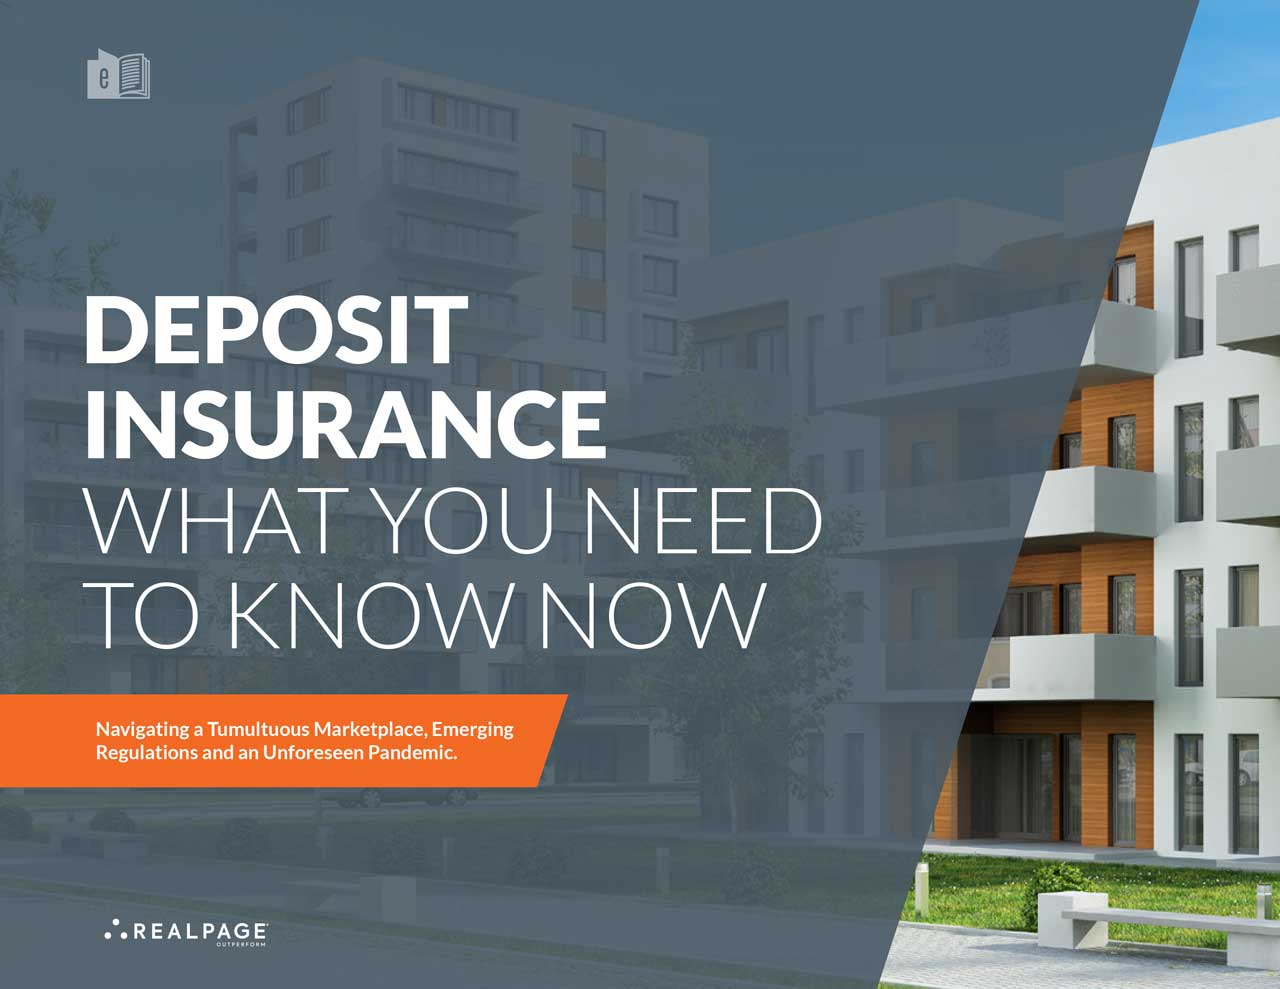 realpage deposit insurance – the security deposit alternative that’s a true win-win